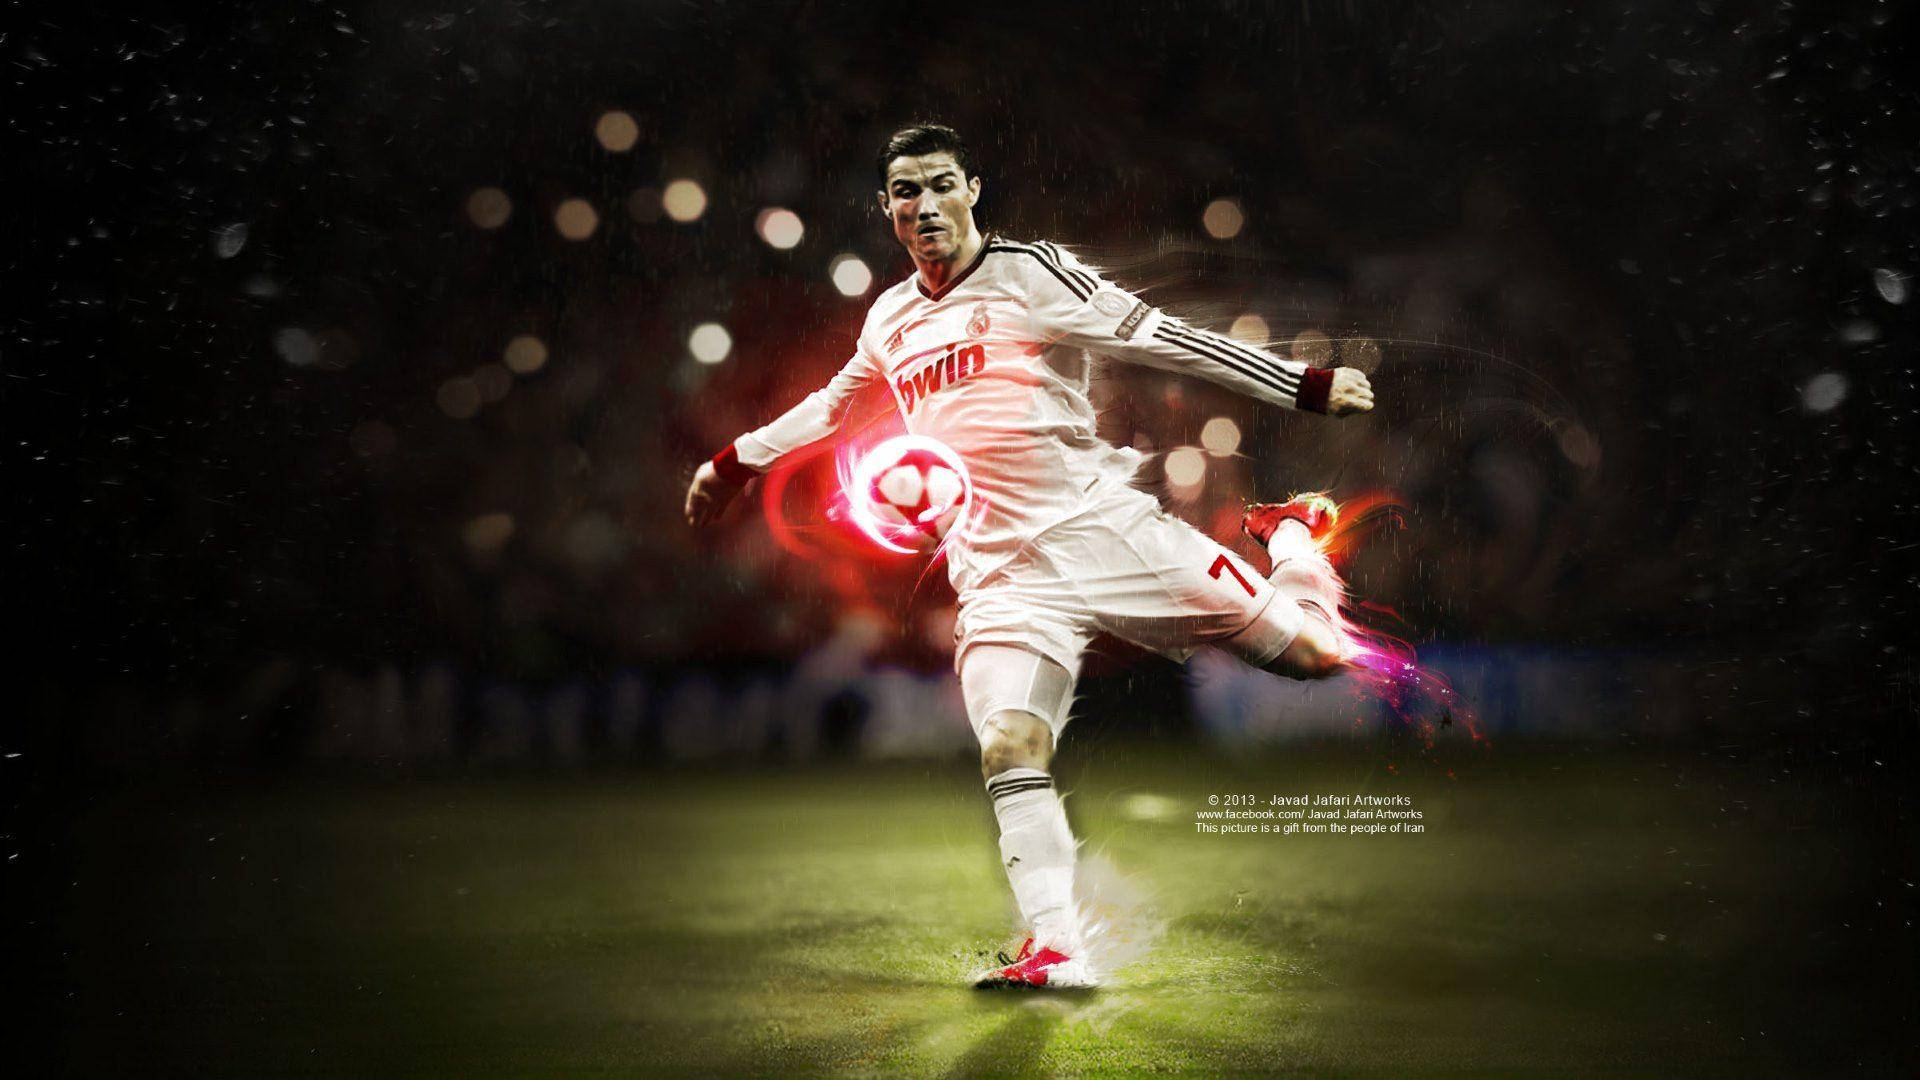 Download Cristiano Ronaldo Glowing Football Art Wallpaper 